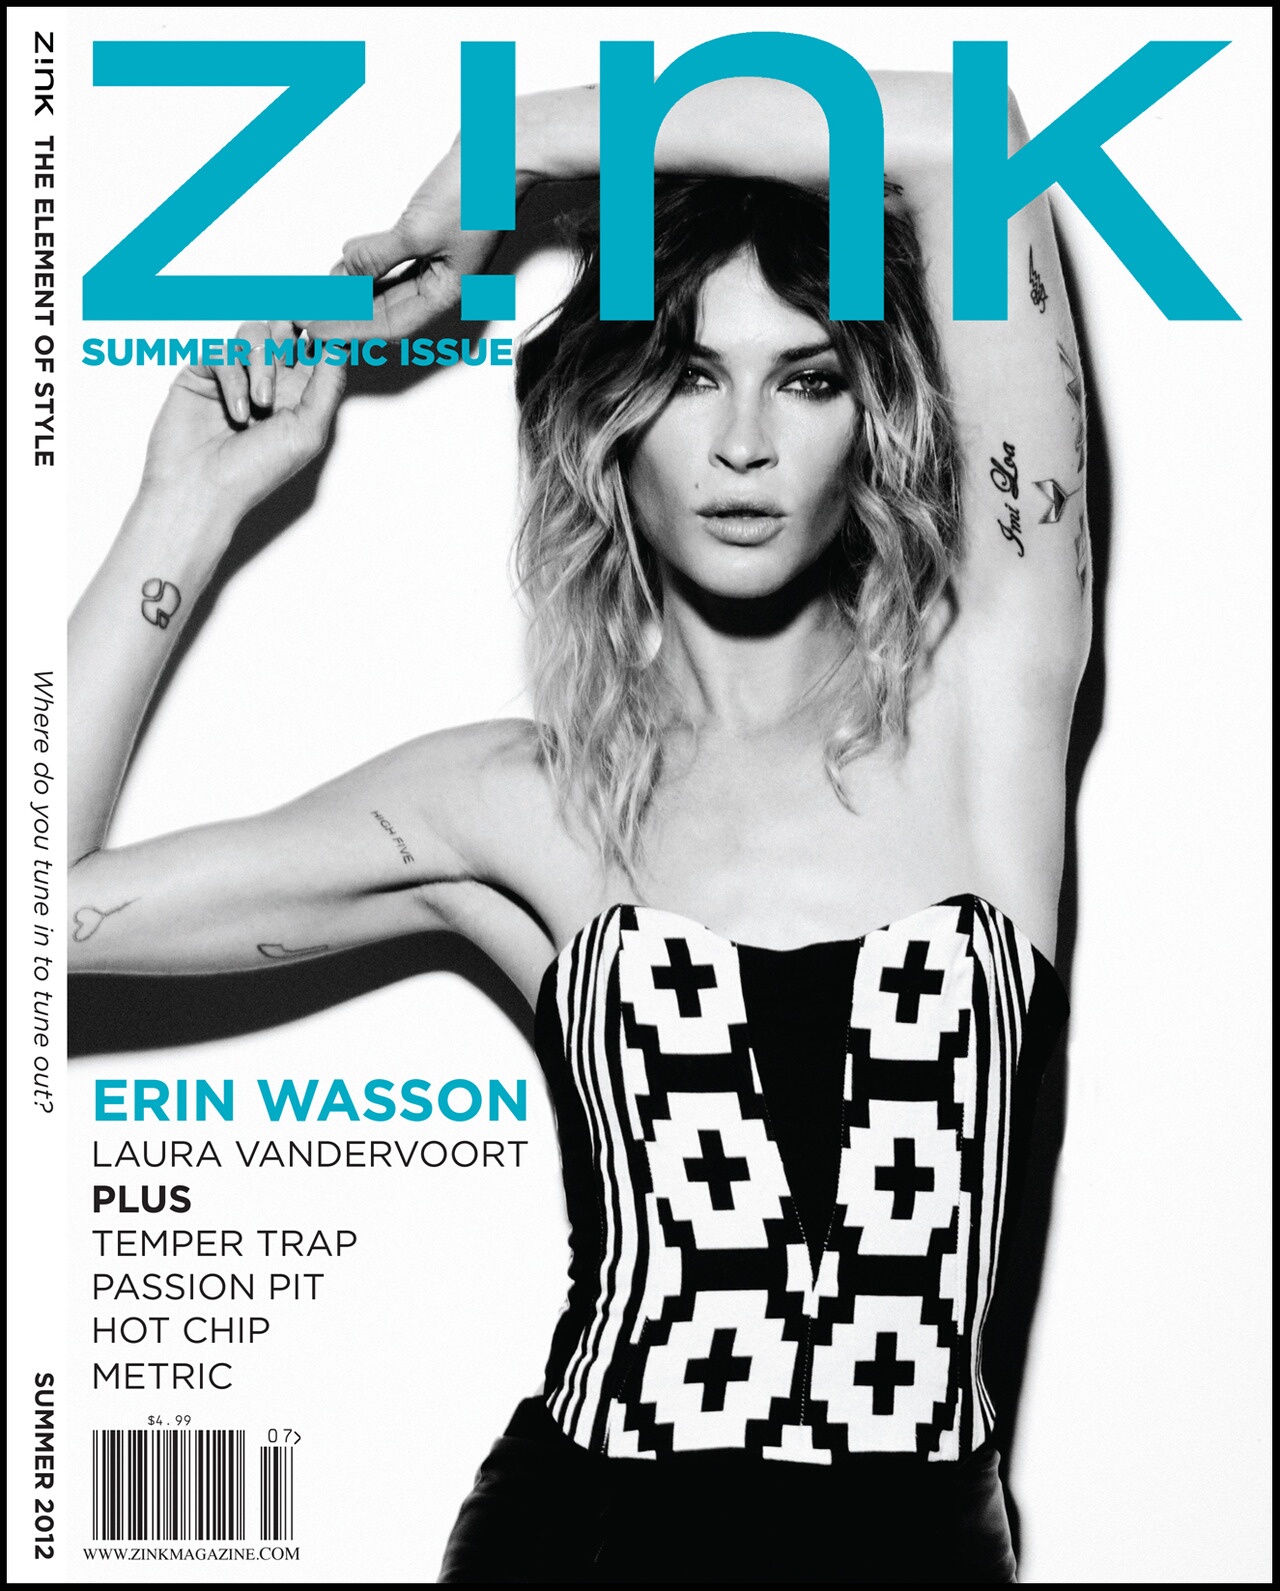 Erin Wasson topless for Zink Magazine